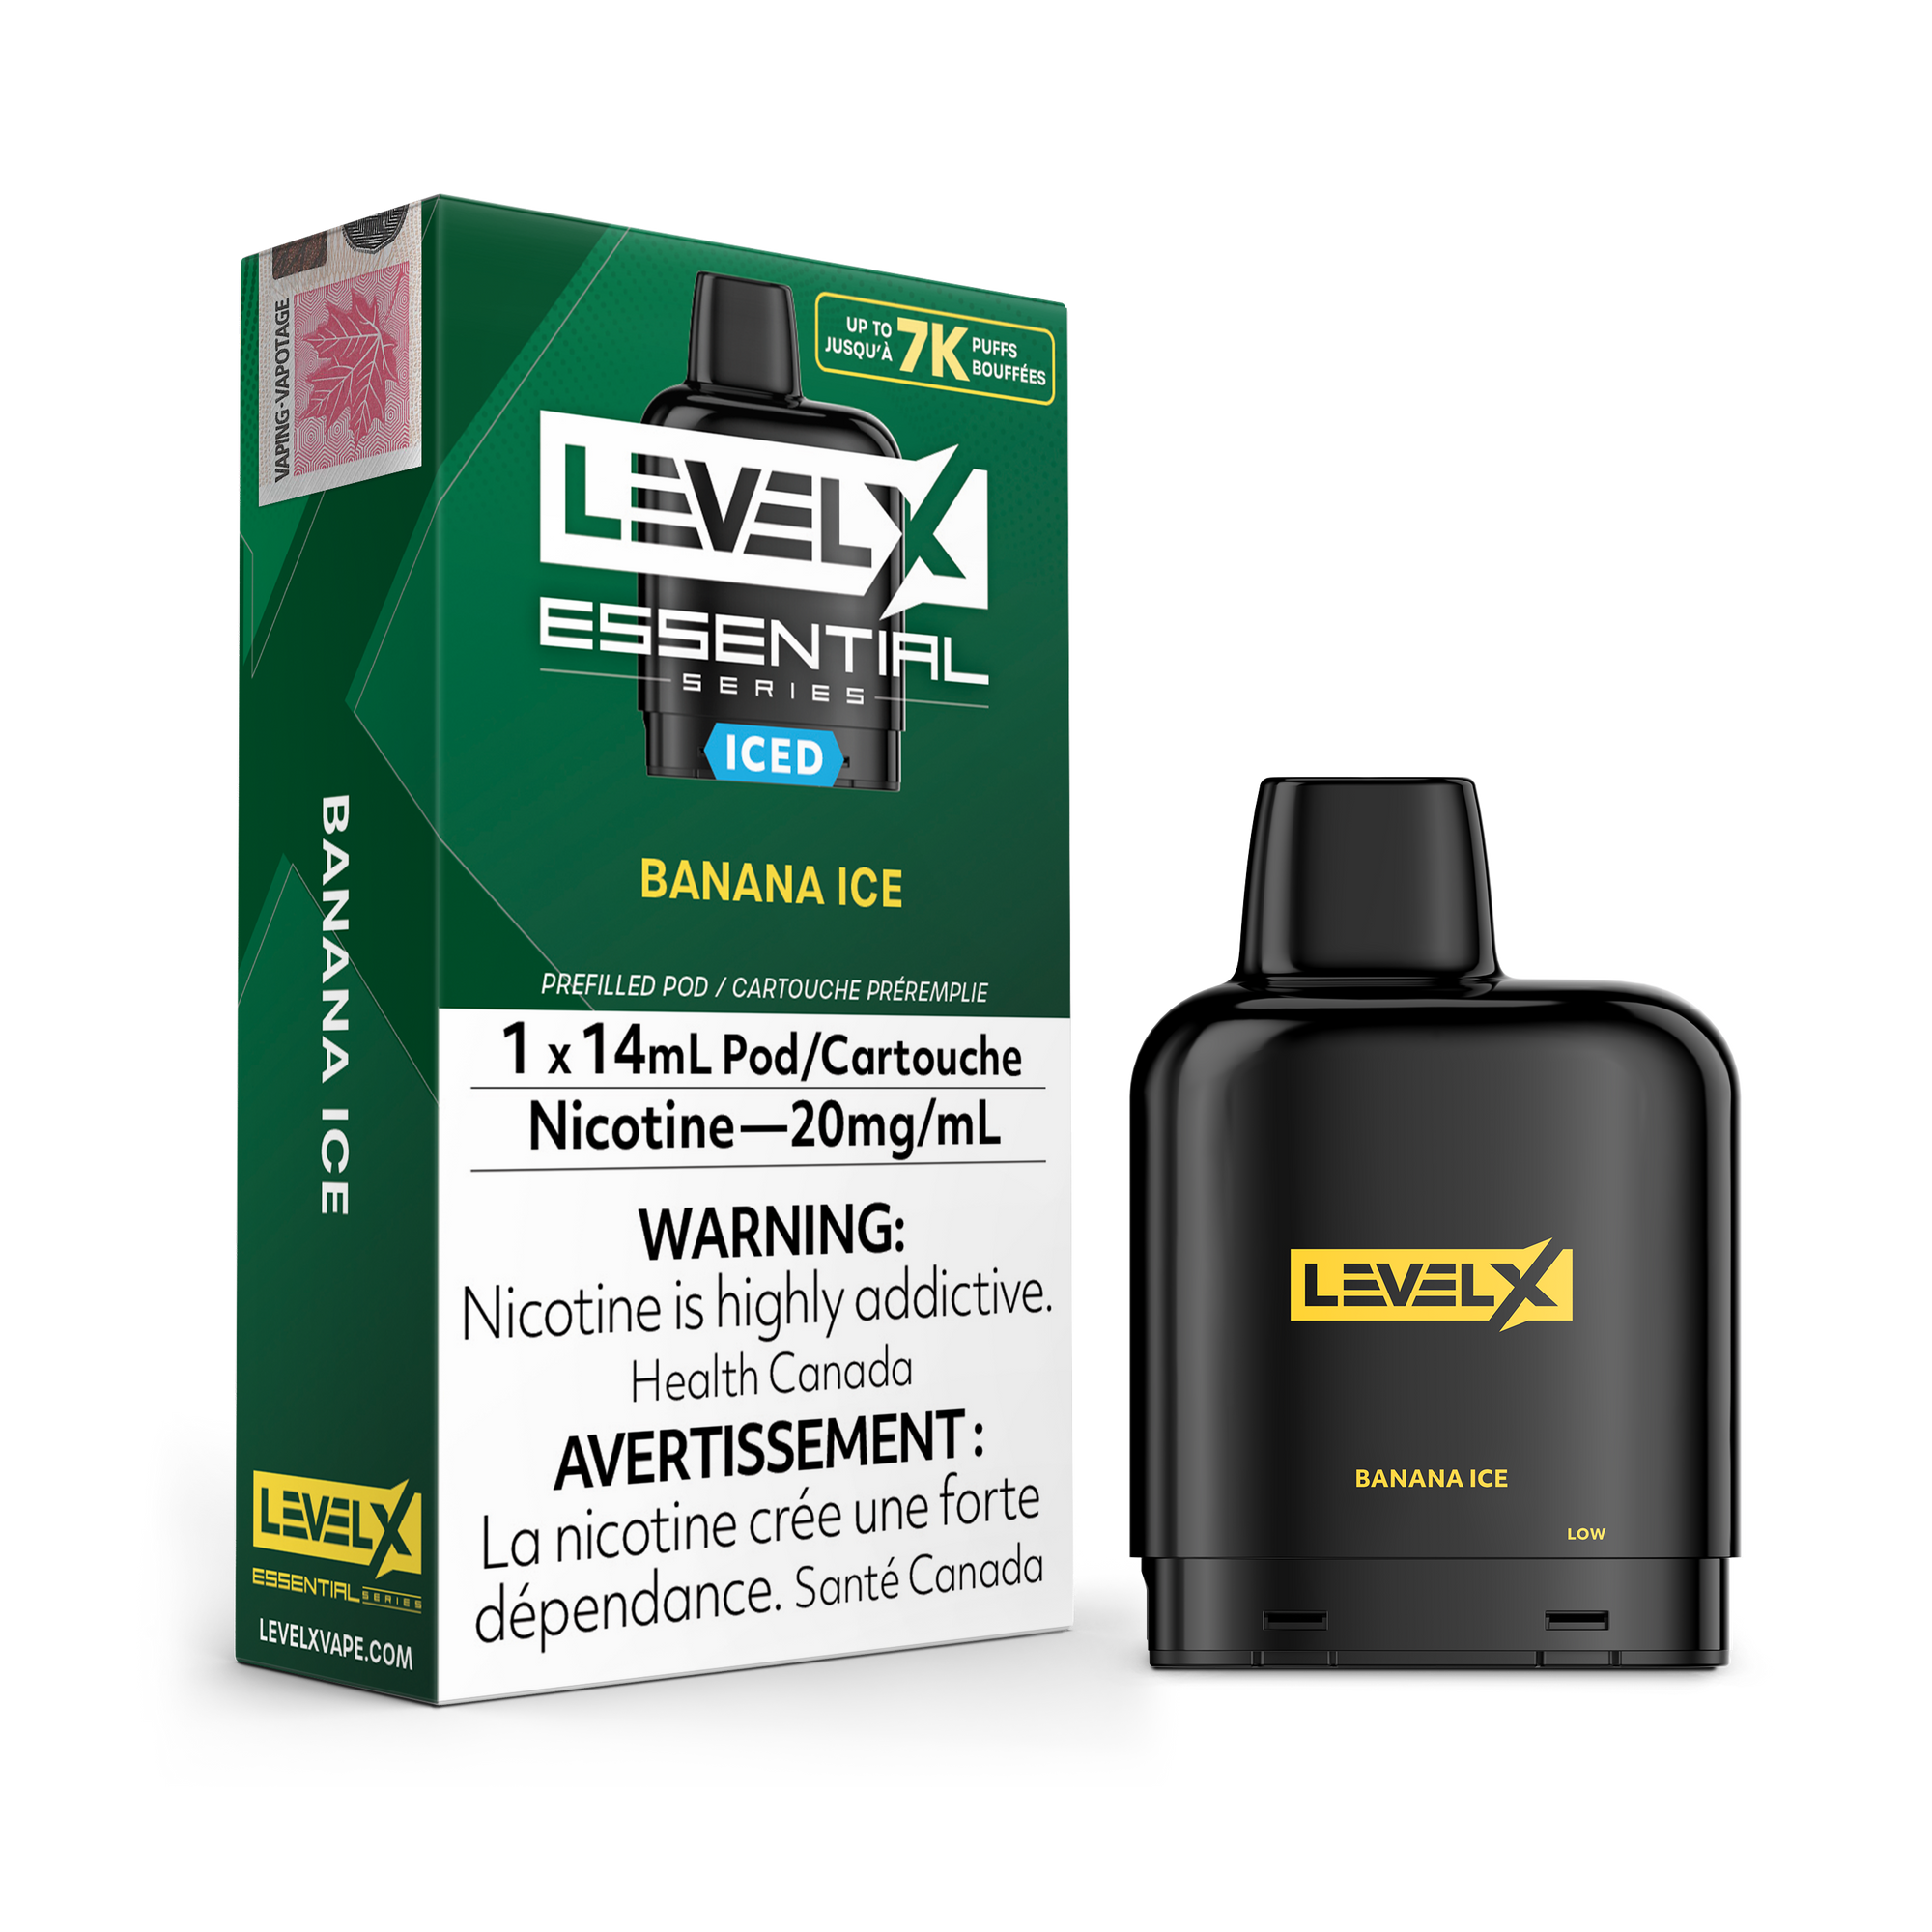 Level X - Essential Series 7000 puff